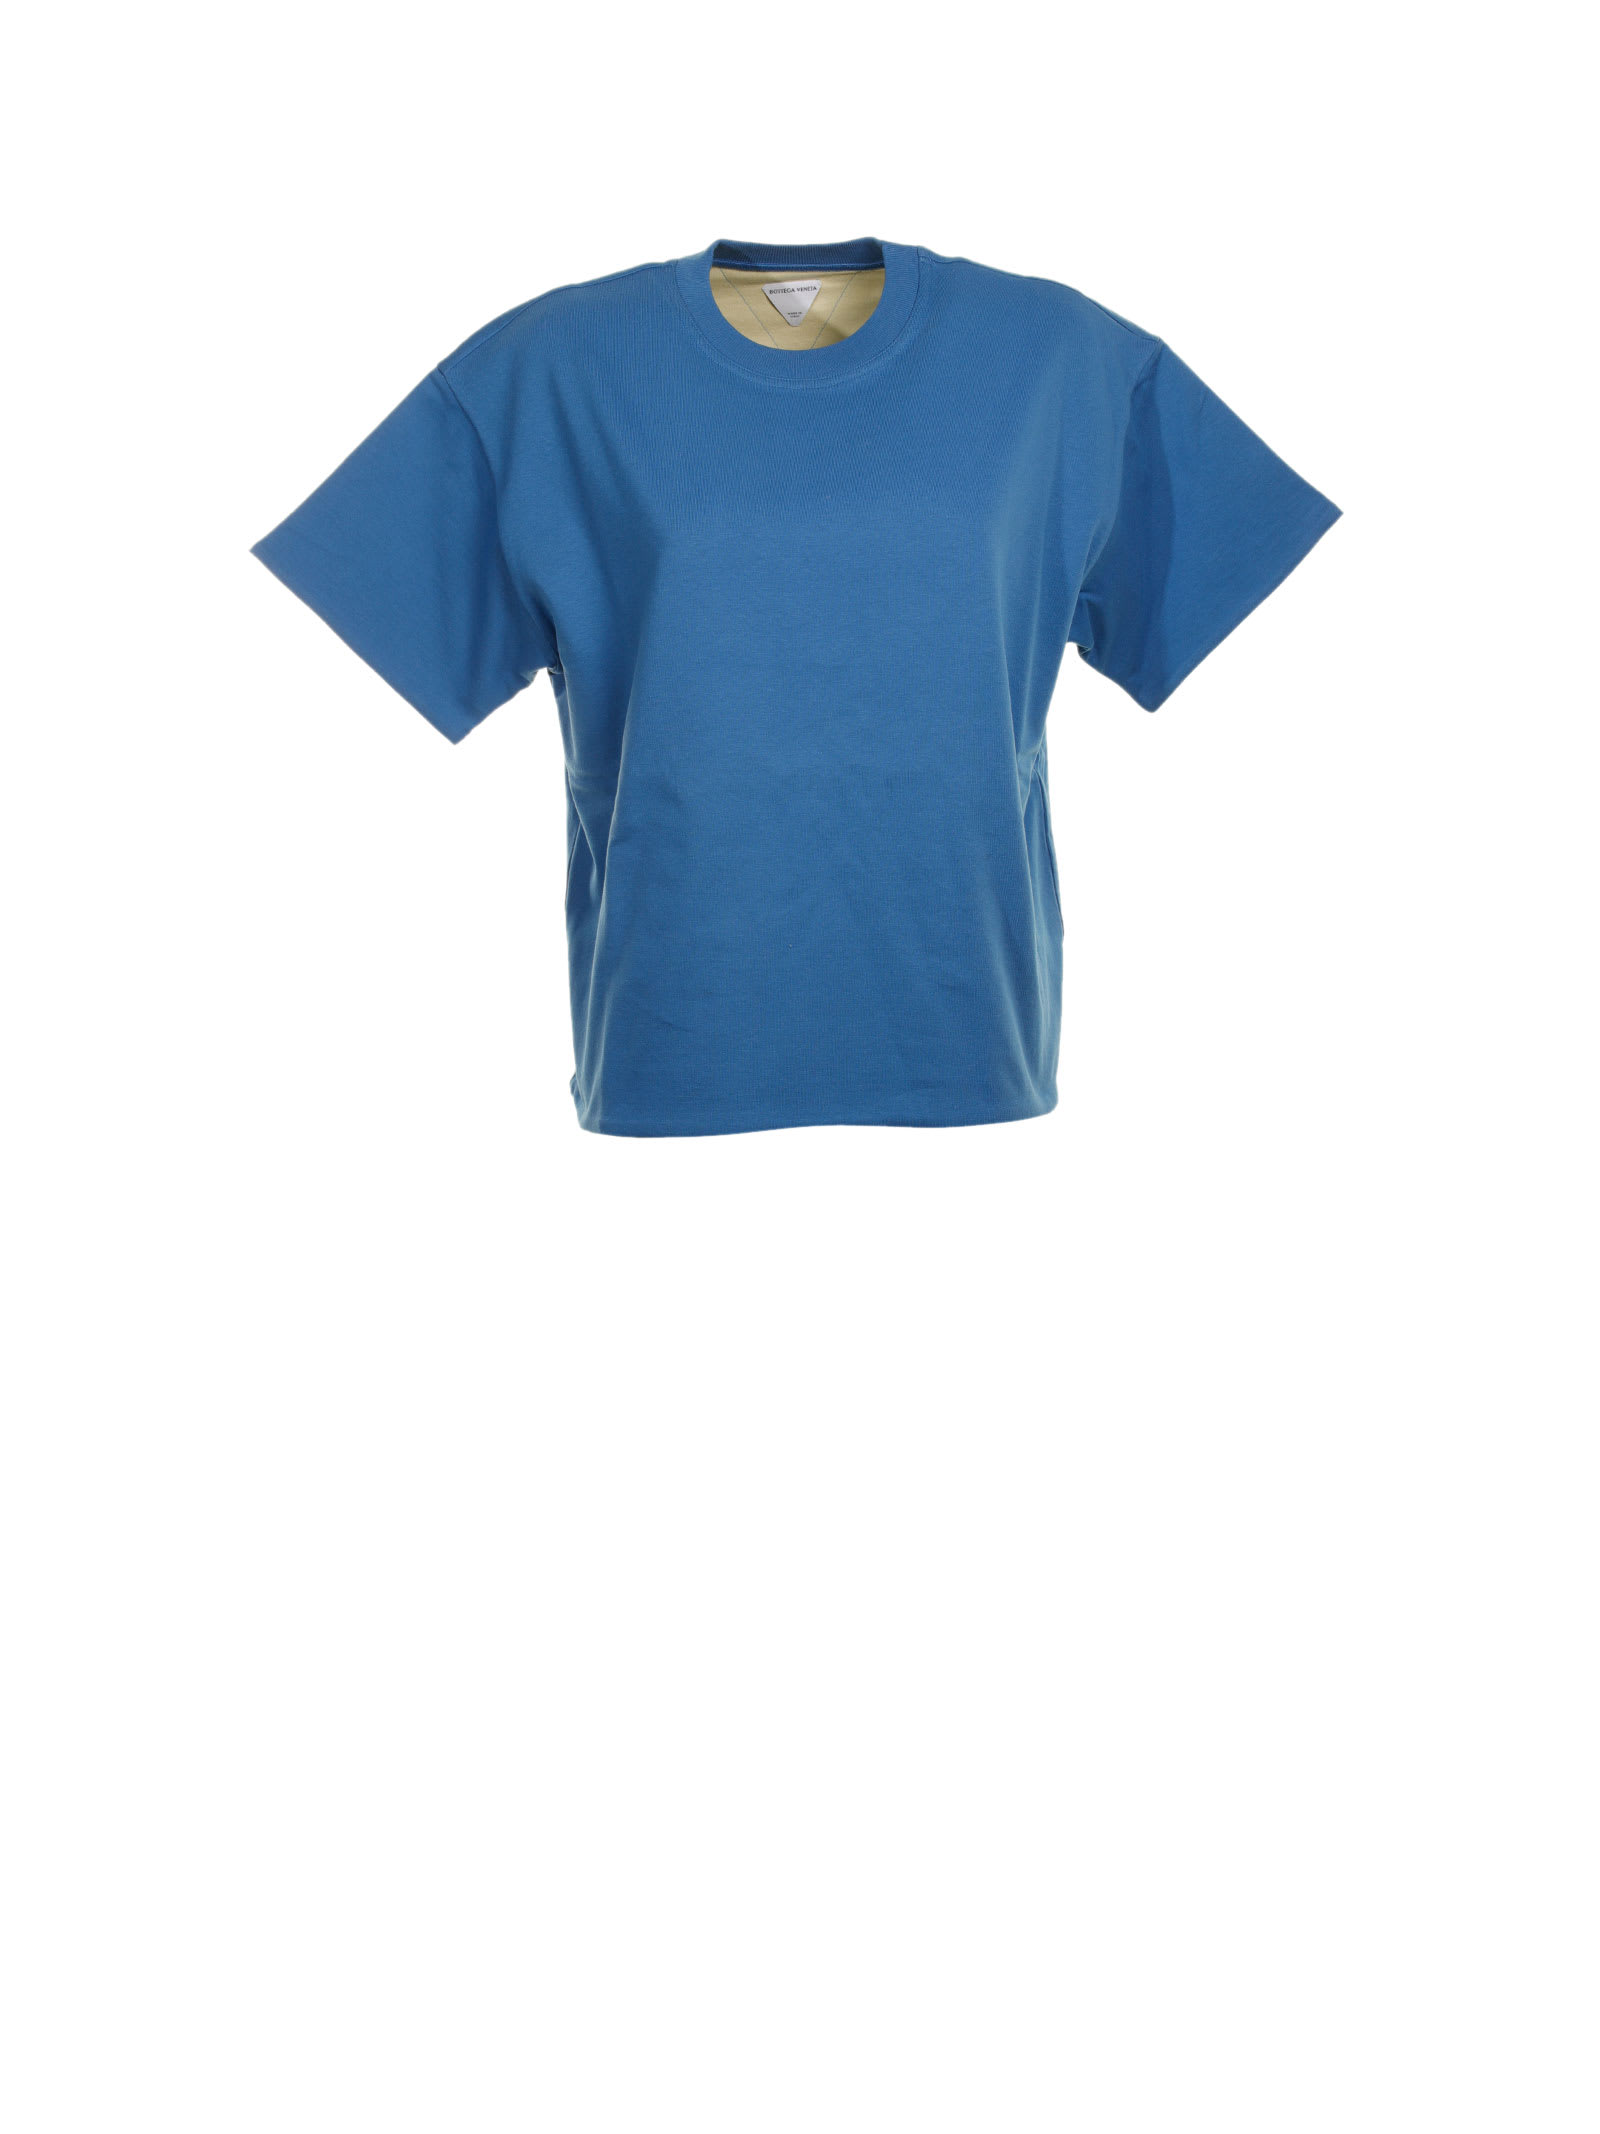 Bottega Veneta Bluette Cotton Crew-neck T-shirt